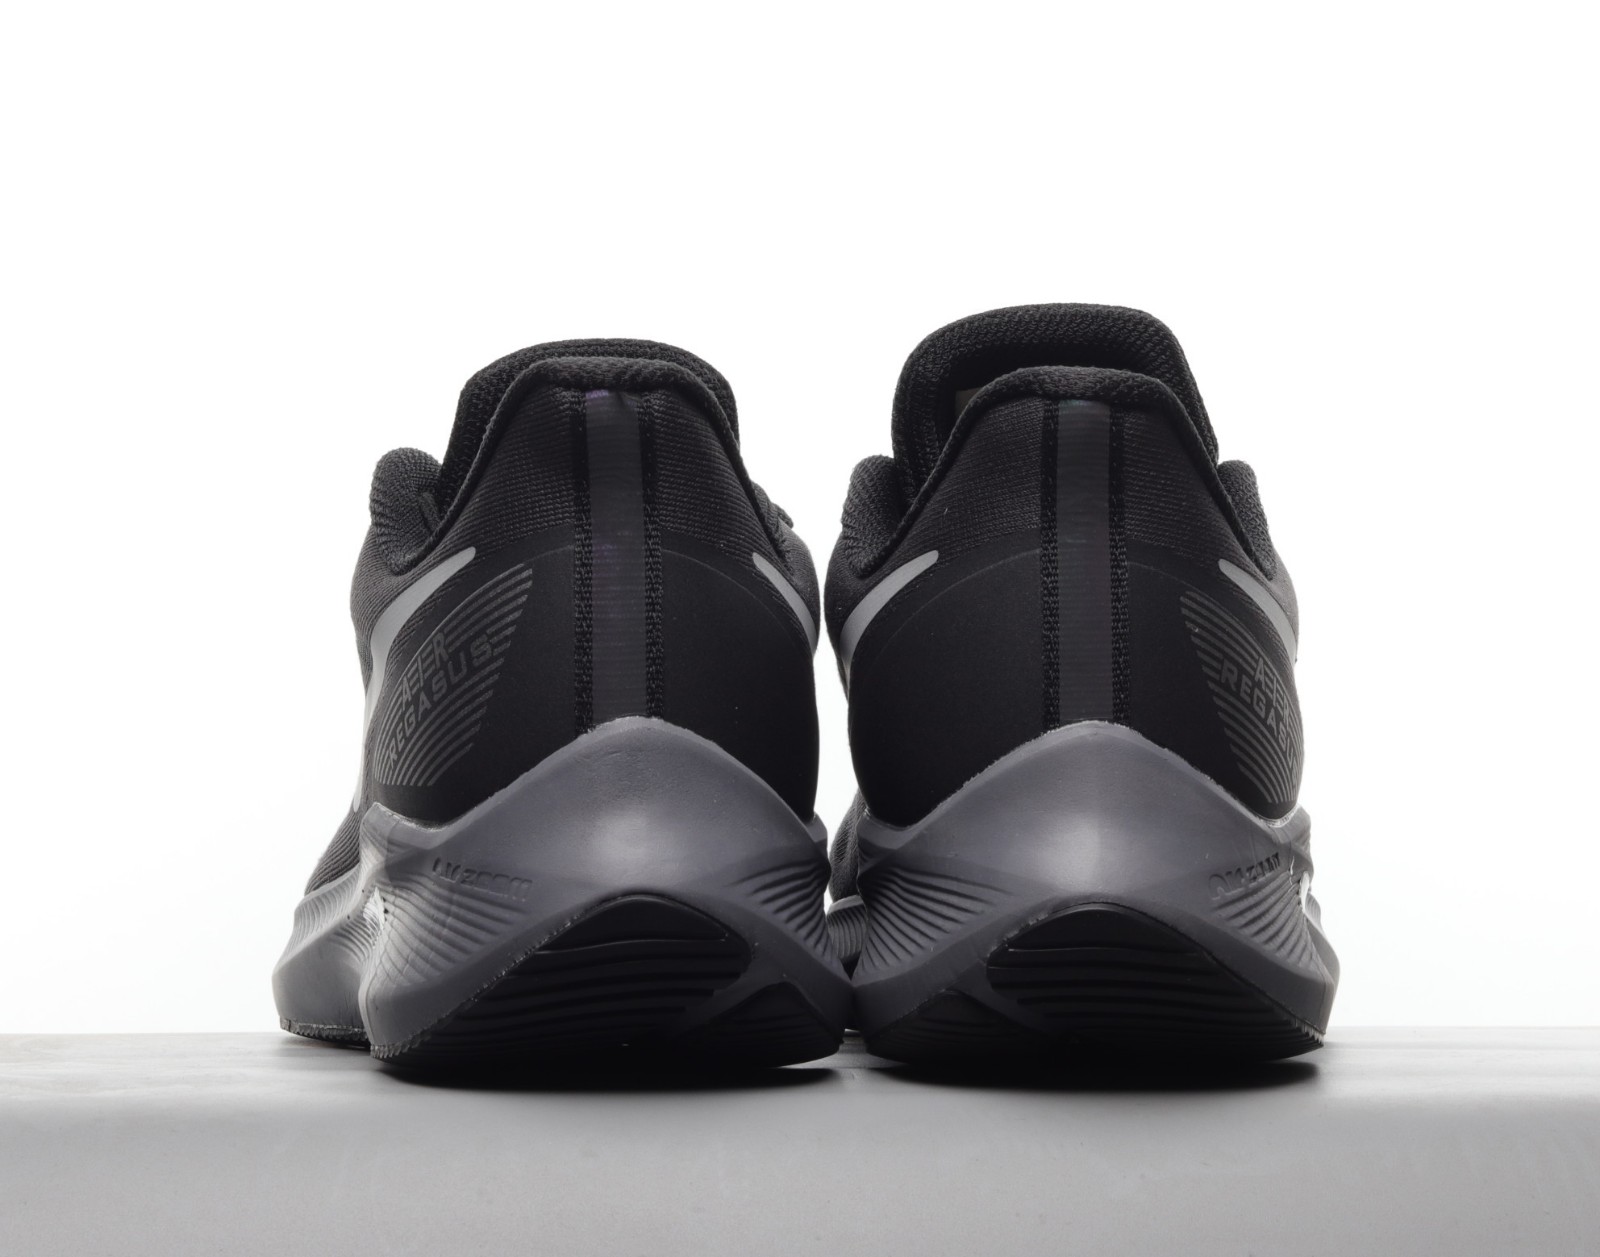 002 - LunarGlide 8 Running Shoes Black Silver Grey 843725 - StclaircomoShops - Dorado Lifestyle Wp 39Q4936